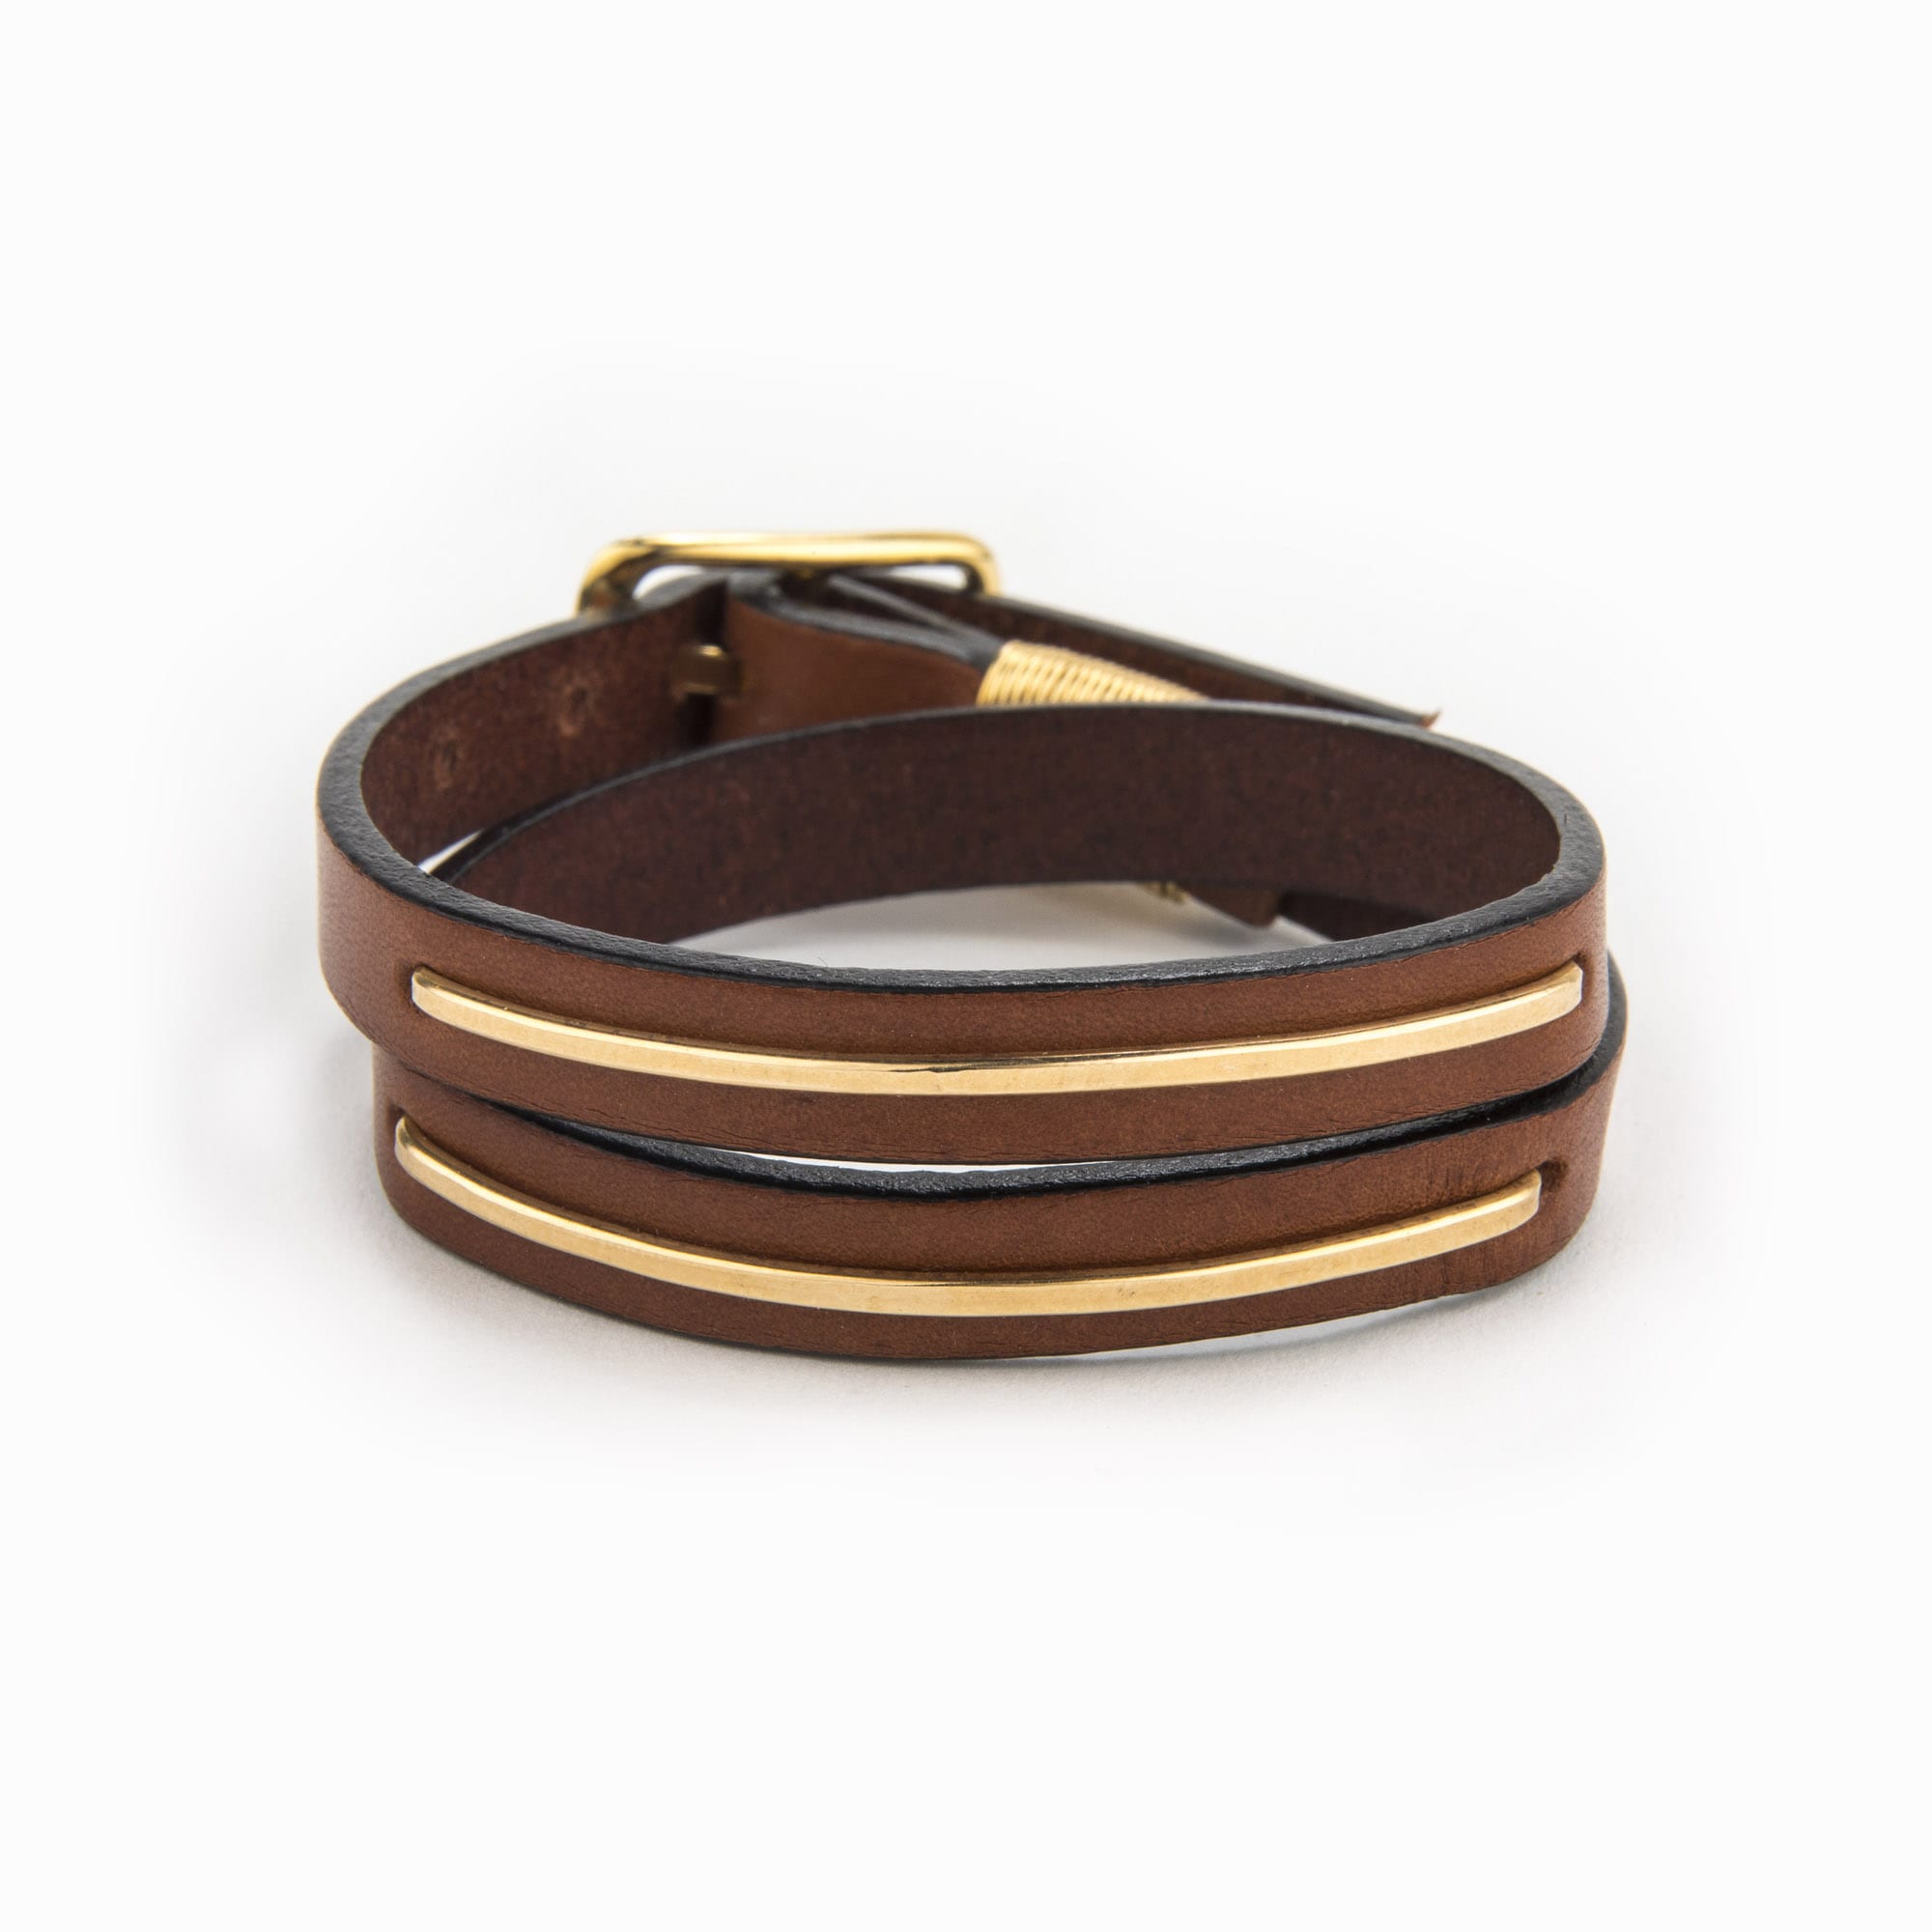 Featured image for “Cerberus Leather Bracelet”